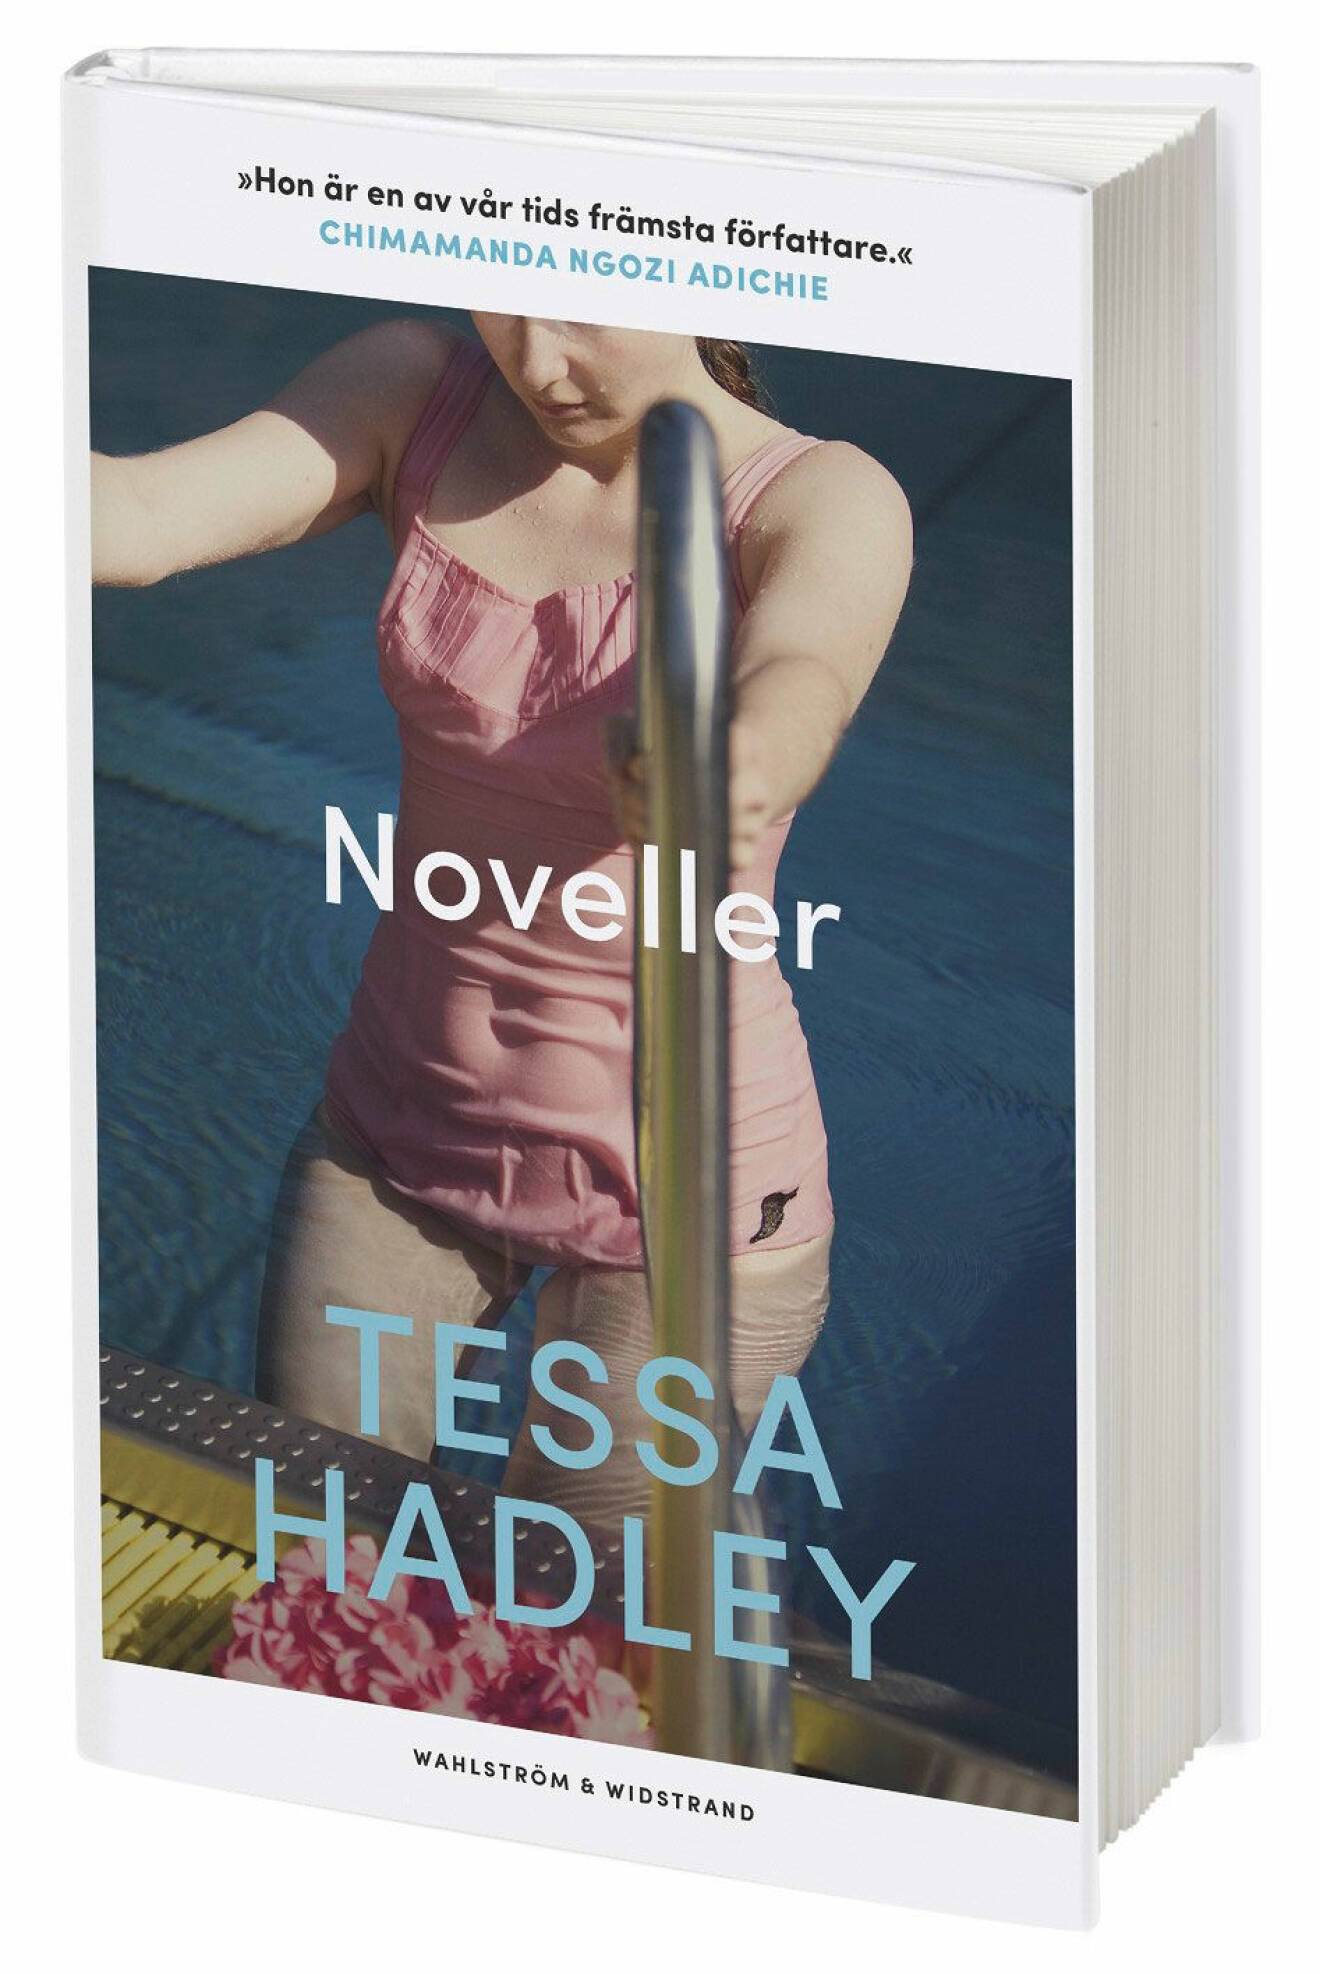 Noveller av Tessa Hadley.